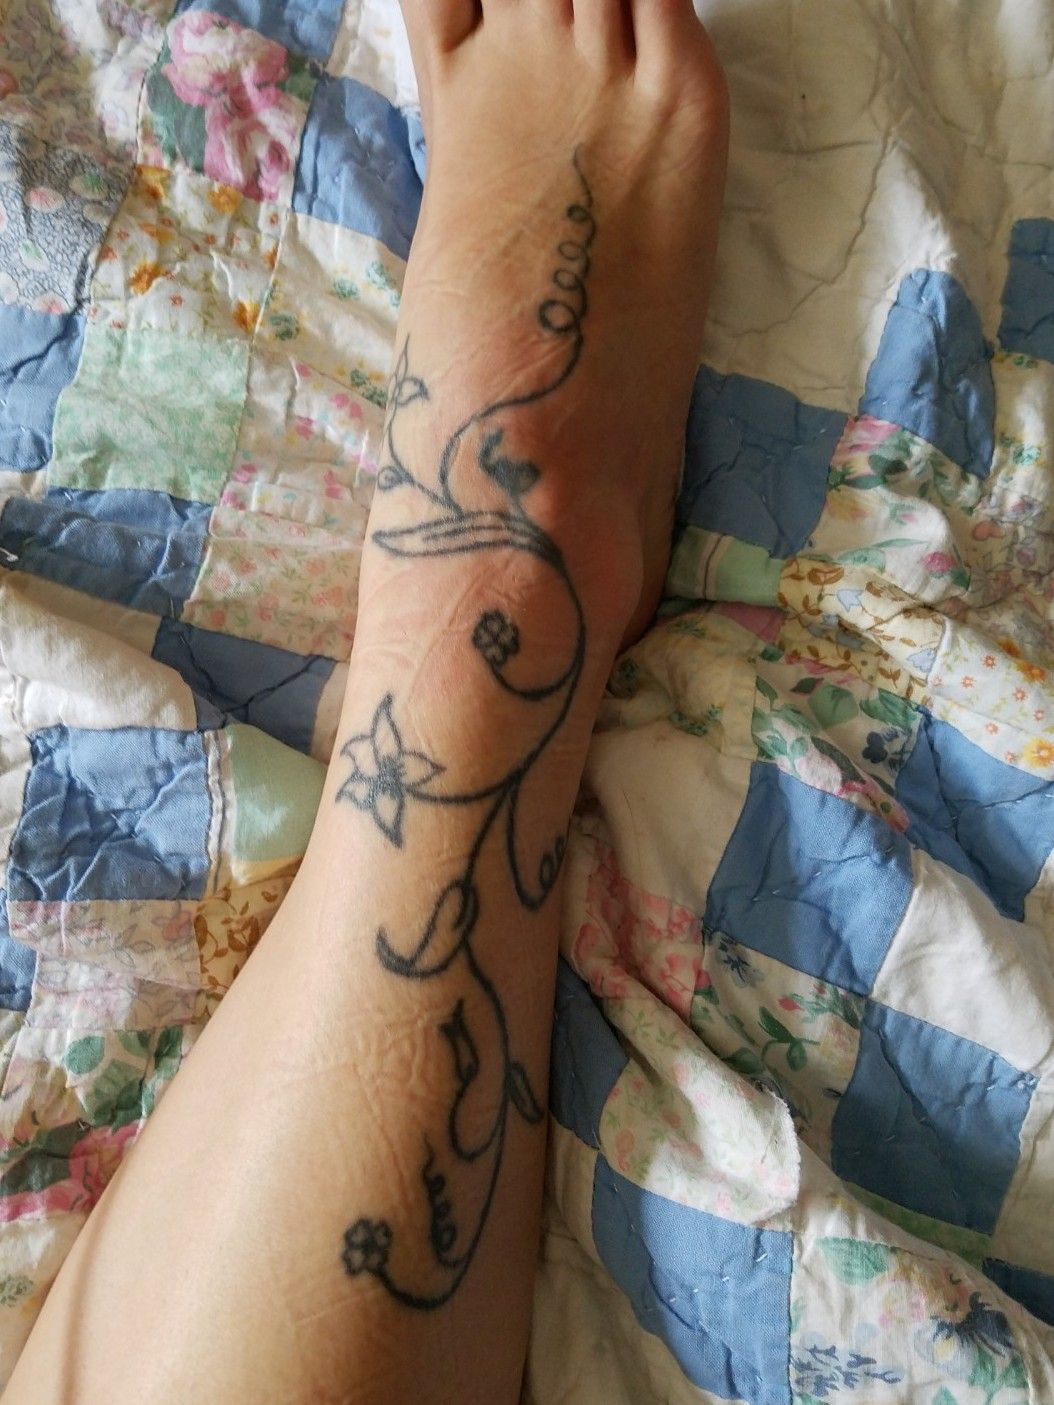 Stunning Flower Ankle Tattoo Ideas Youll Love  Tattoo Glee